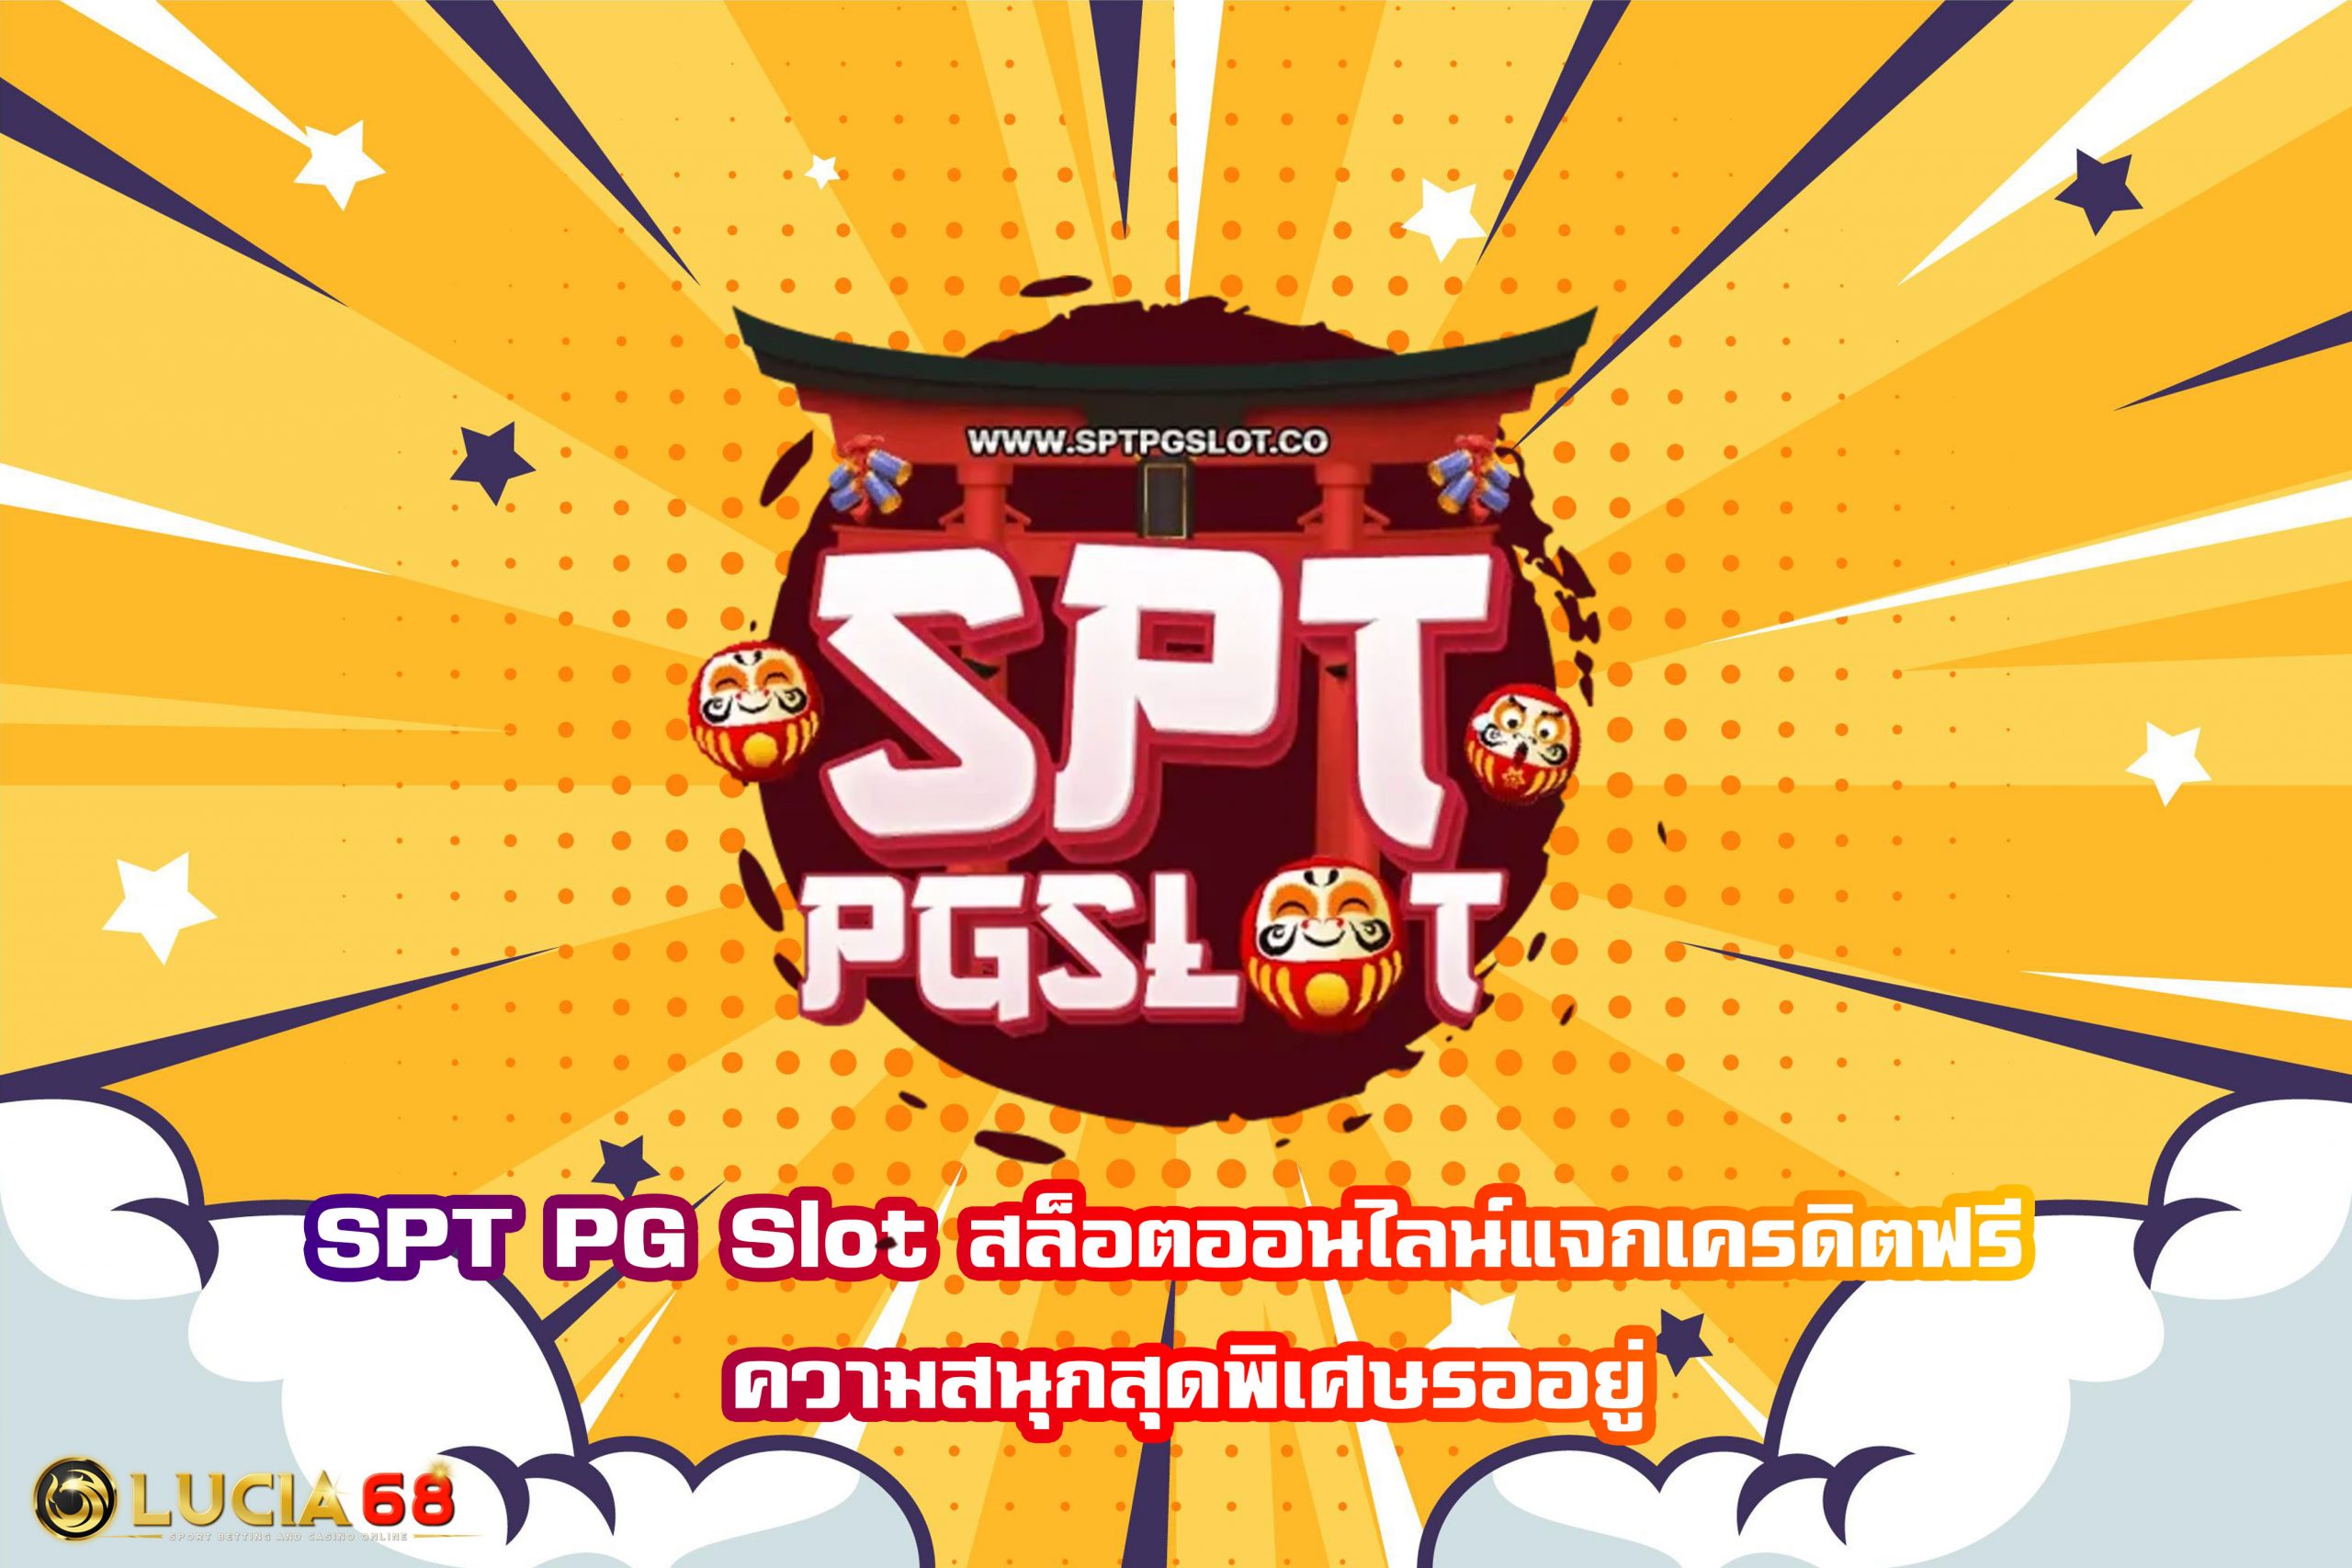 SPT PG Slot สล็อตออนไลน์แจกเครดิตฟรี ความสนุกสุดพิเศษรออยู่